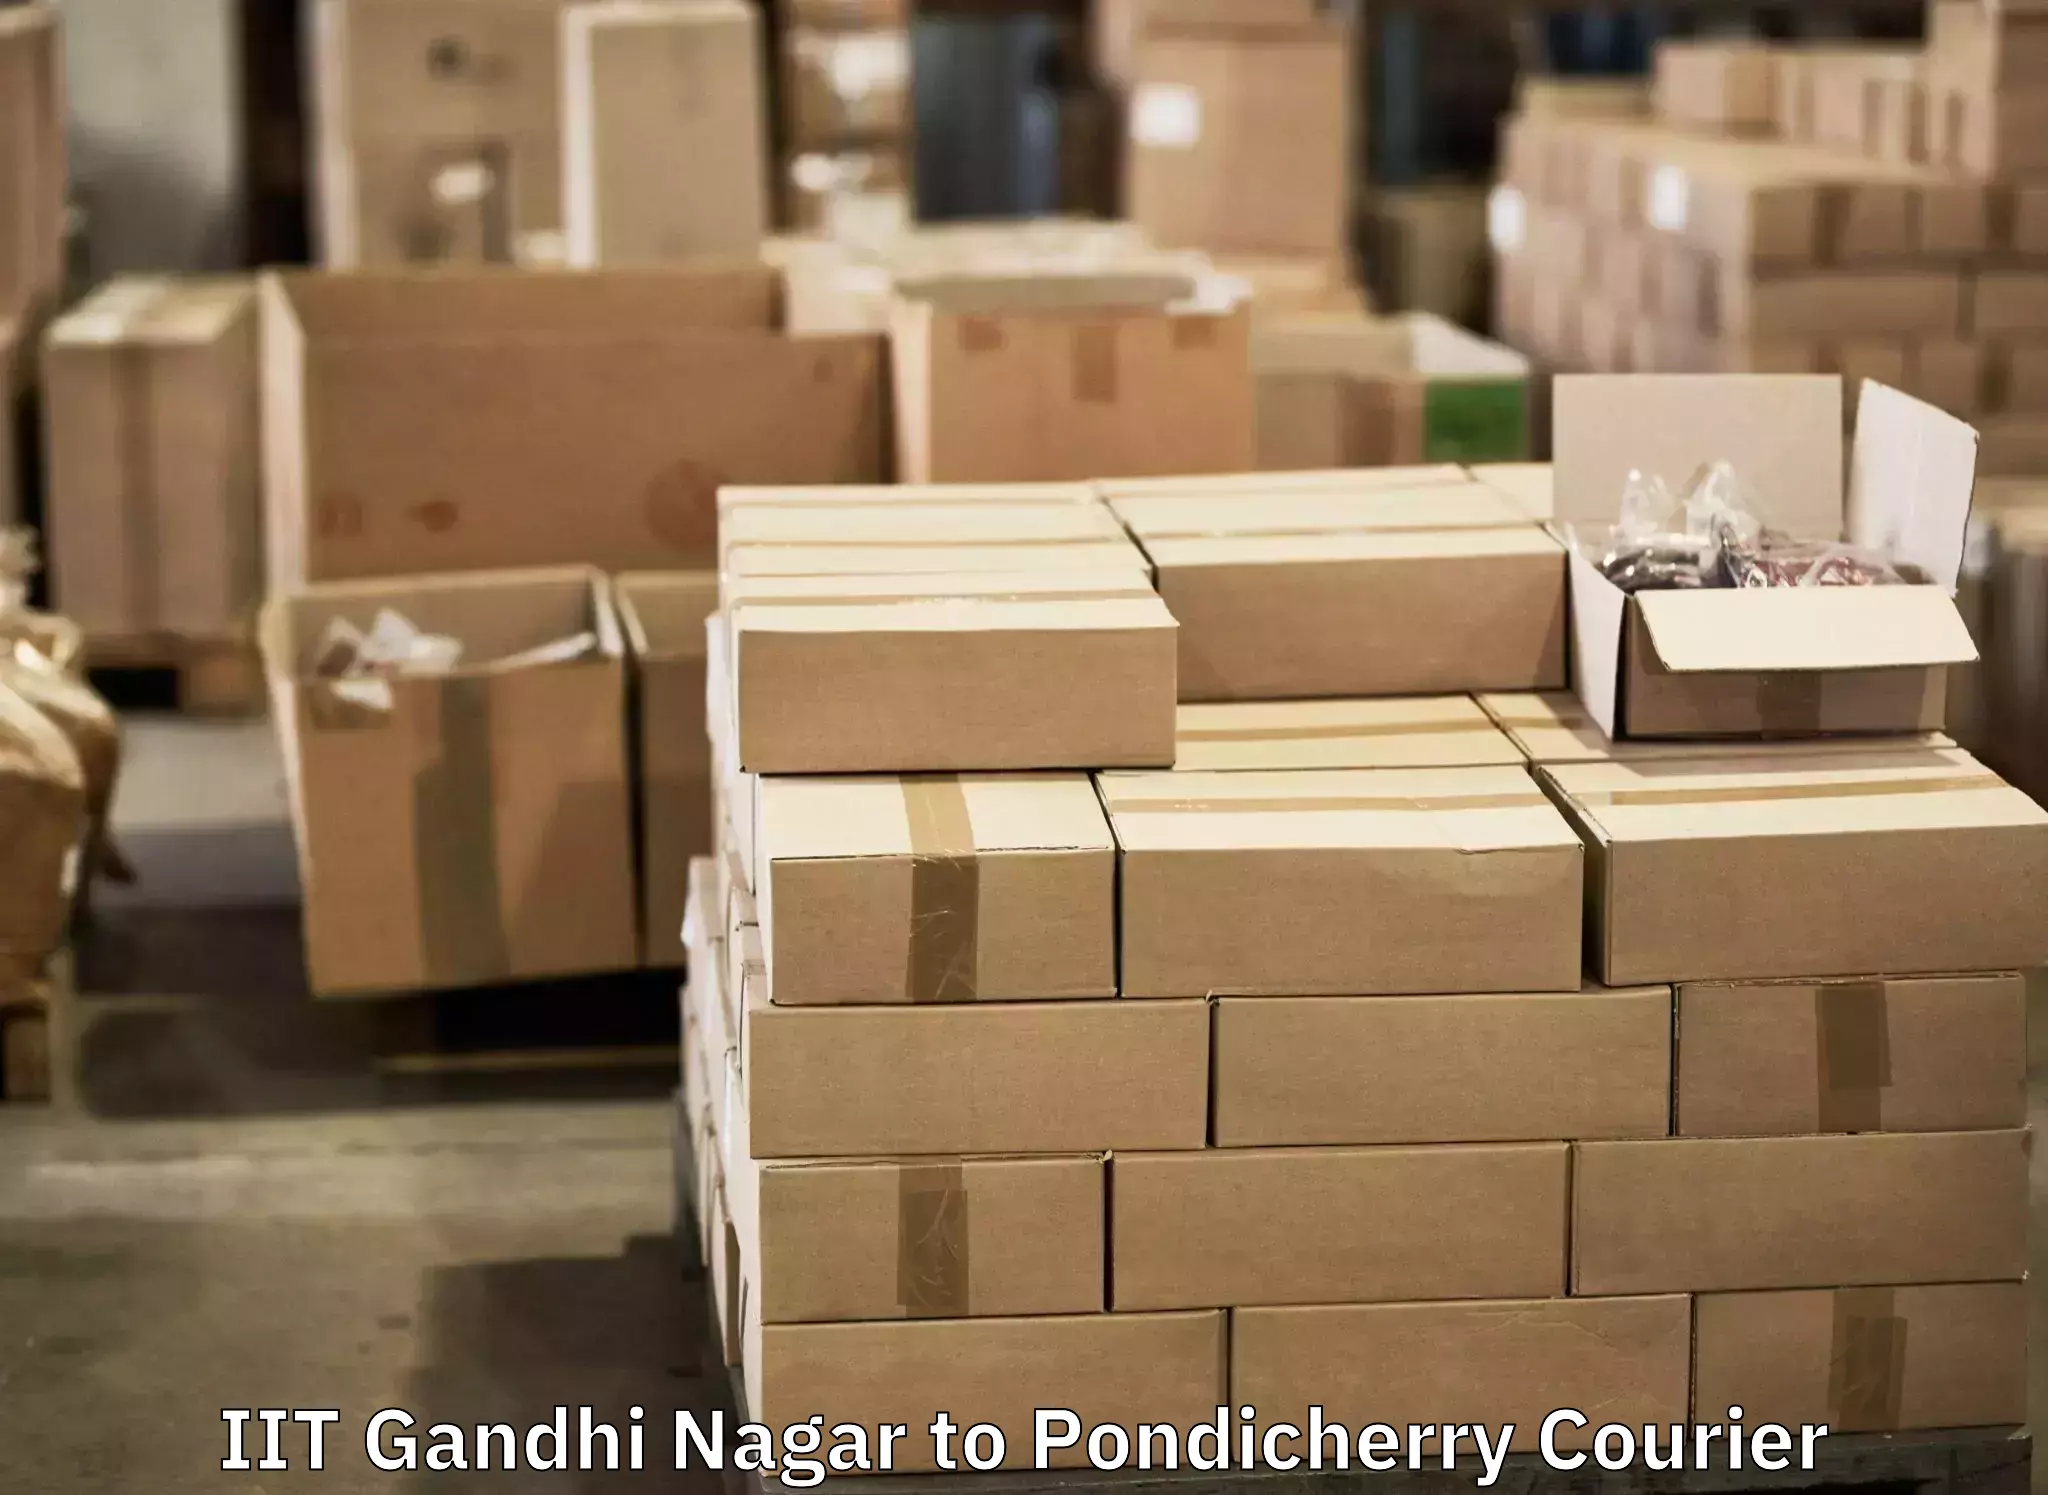 Luggage transport company IIT Gandhi Nagar to Pondicherry